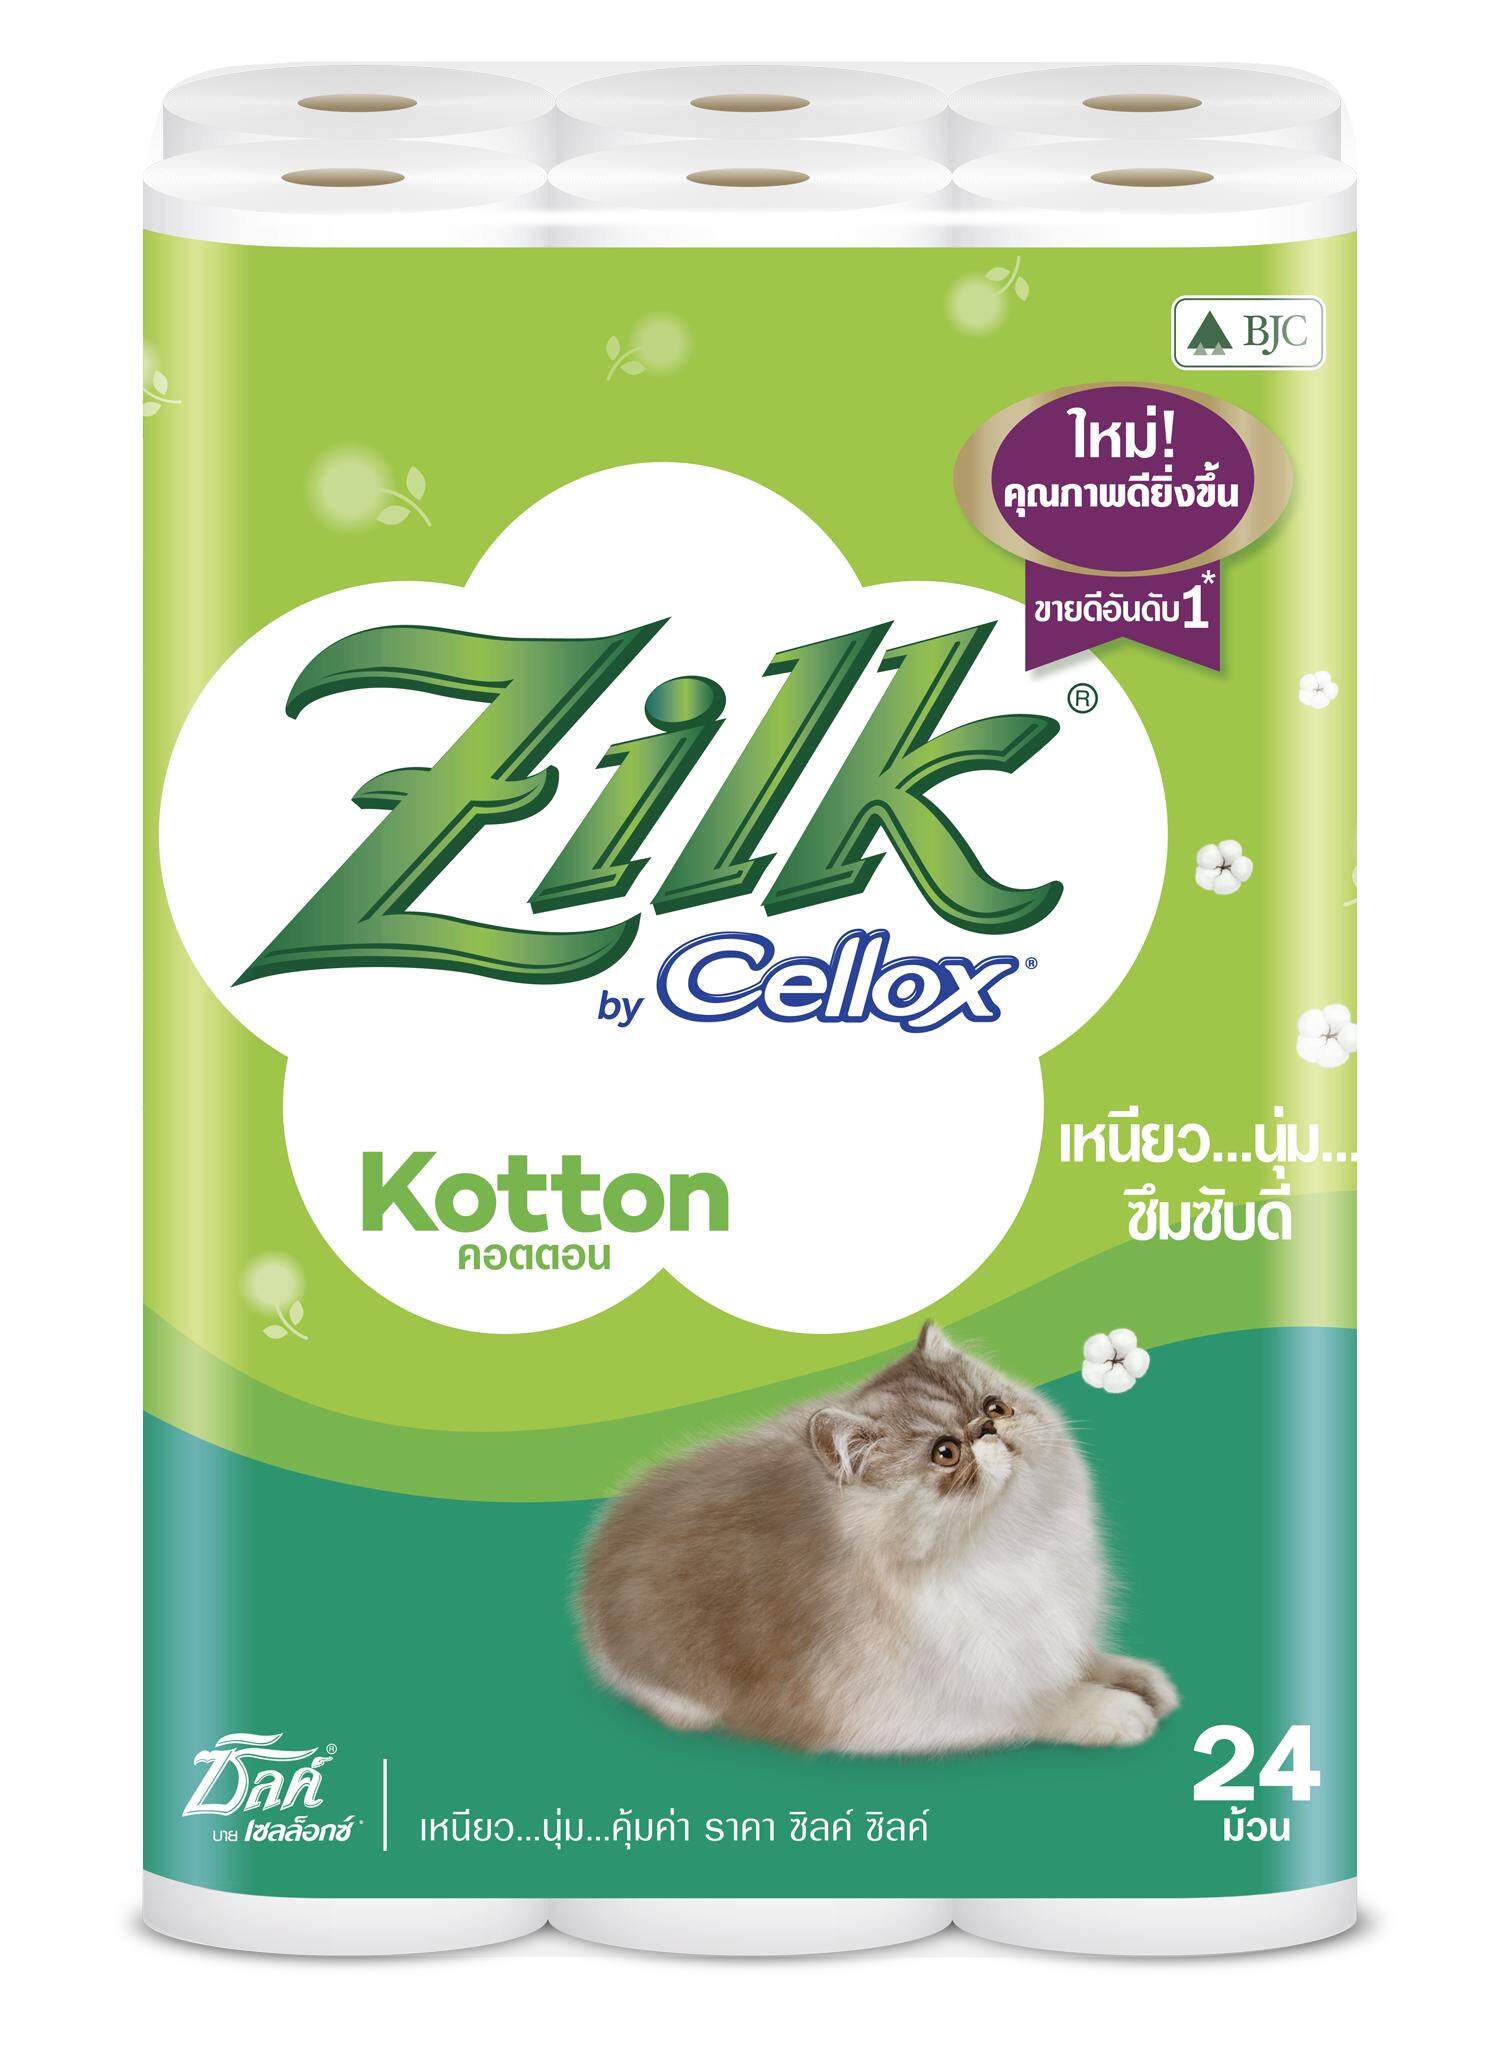 👩‍❤️‍💋‍👩HiSo โบว์ใหญ่!!! Zilk Kotton Toilet Tissue 2 ply 24 roll ซิลค์ คอตตอน กระดาษทิชชูม้วน หนา 2 ชั้น 24 ม้วน [ทิชชู่ ทิชชู่ม้วน กระดาษทิชชู่ กระดาษทิชชู่Zilk] EcoSystem Lazada 💥โล๊ะ ปิดโกดัง🍁